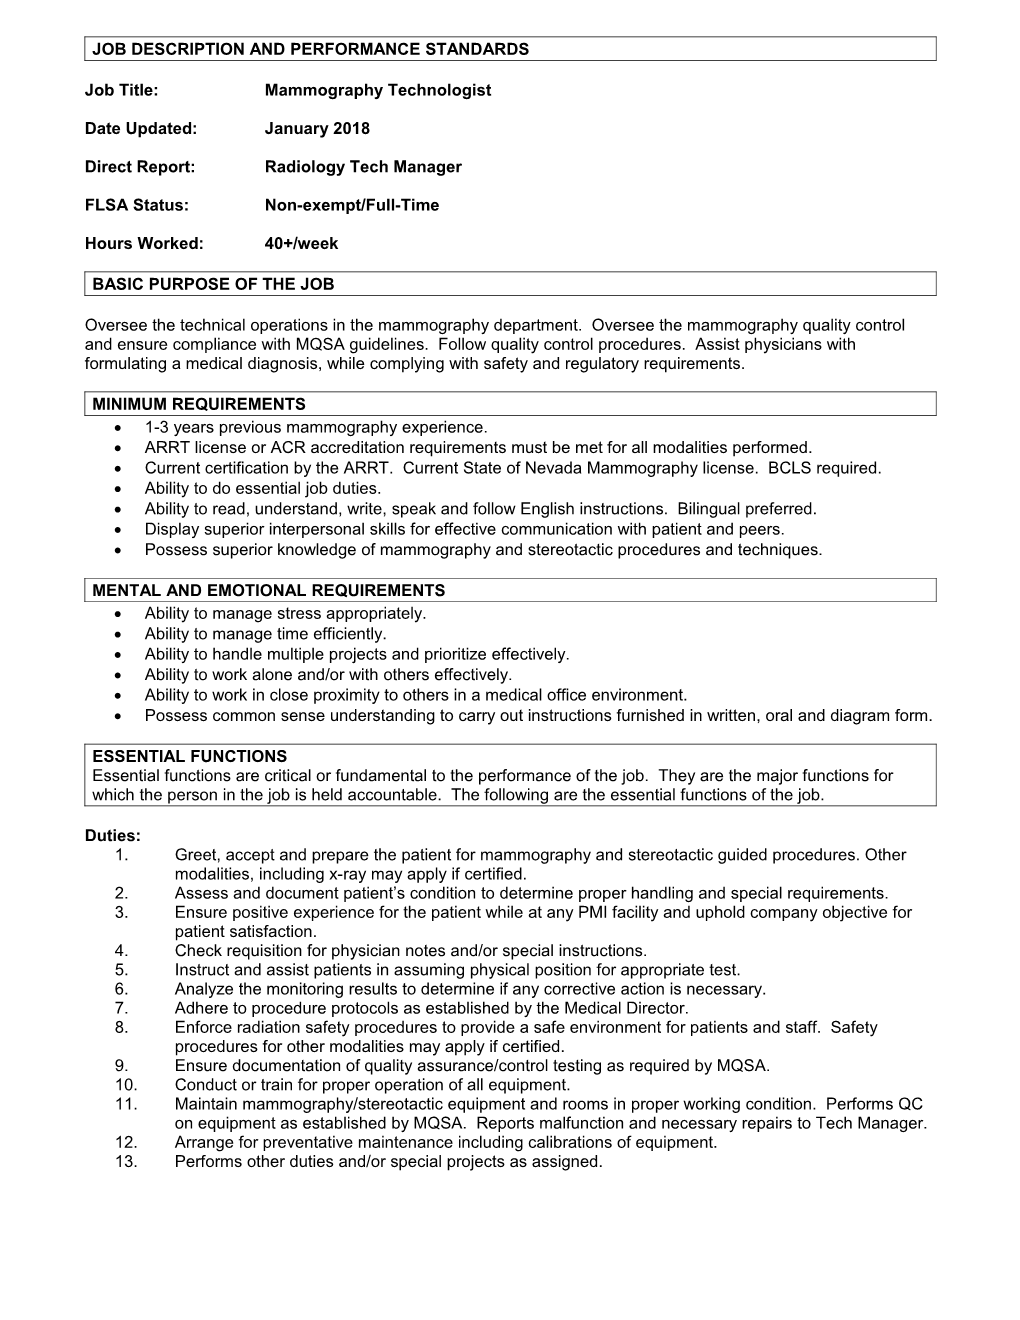 Job Description and Performance Standards